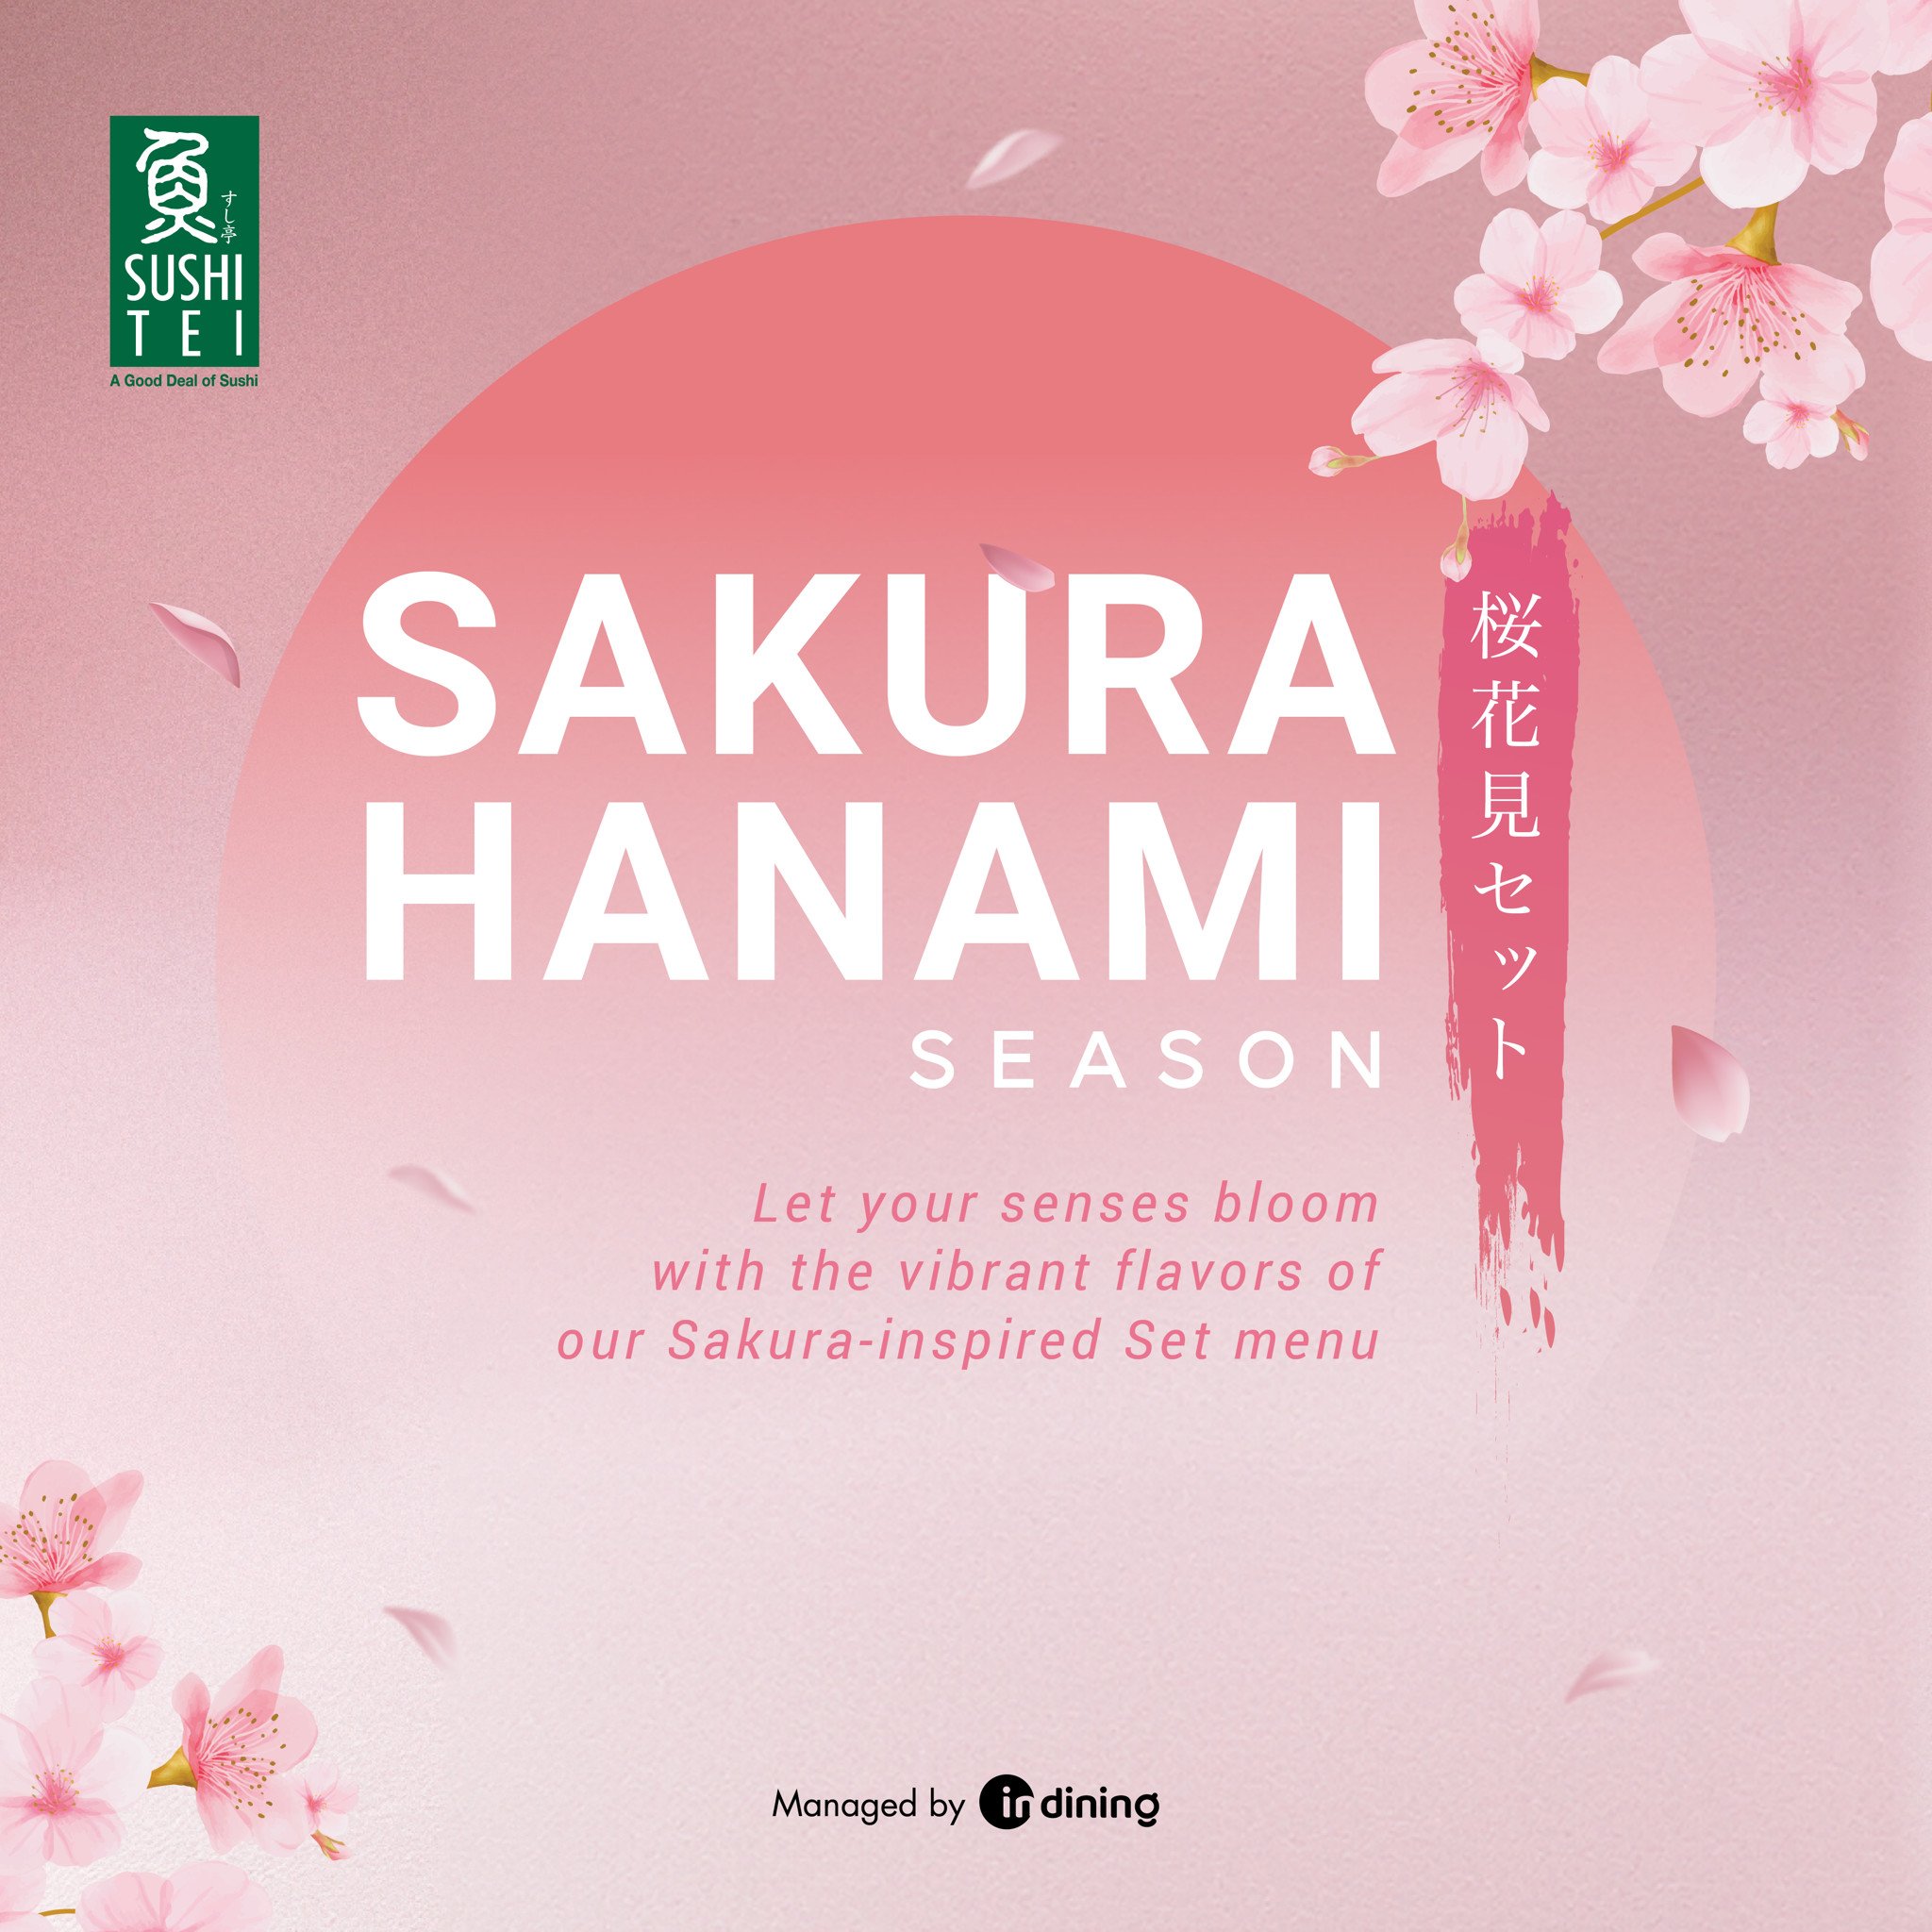 SAKURA HANAMI SET MENU - LET YOUR SENSES BLOOM WITH THE VIBRANT FLAVORS